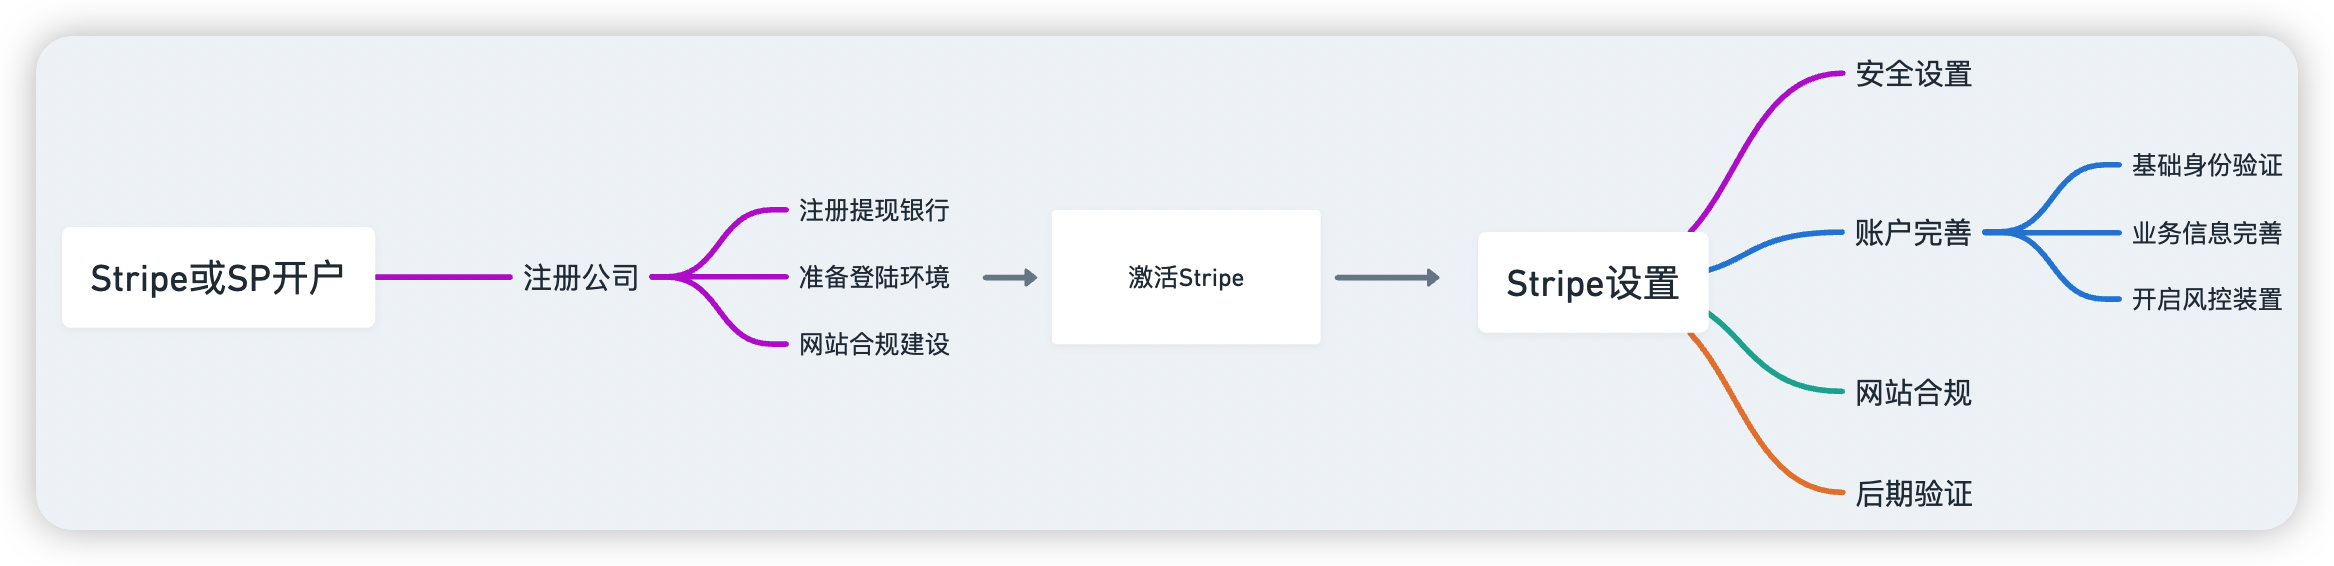 Stripe 与 Shopify payments注册表格说明-Helpayments